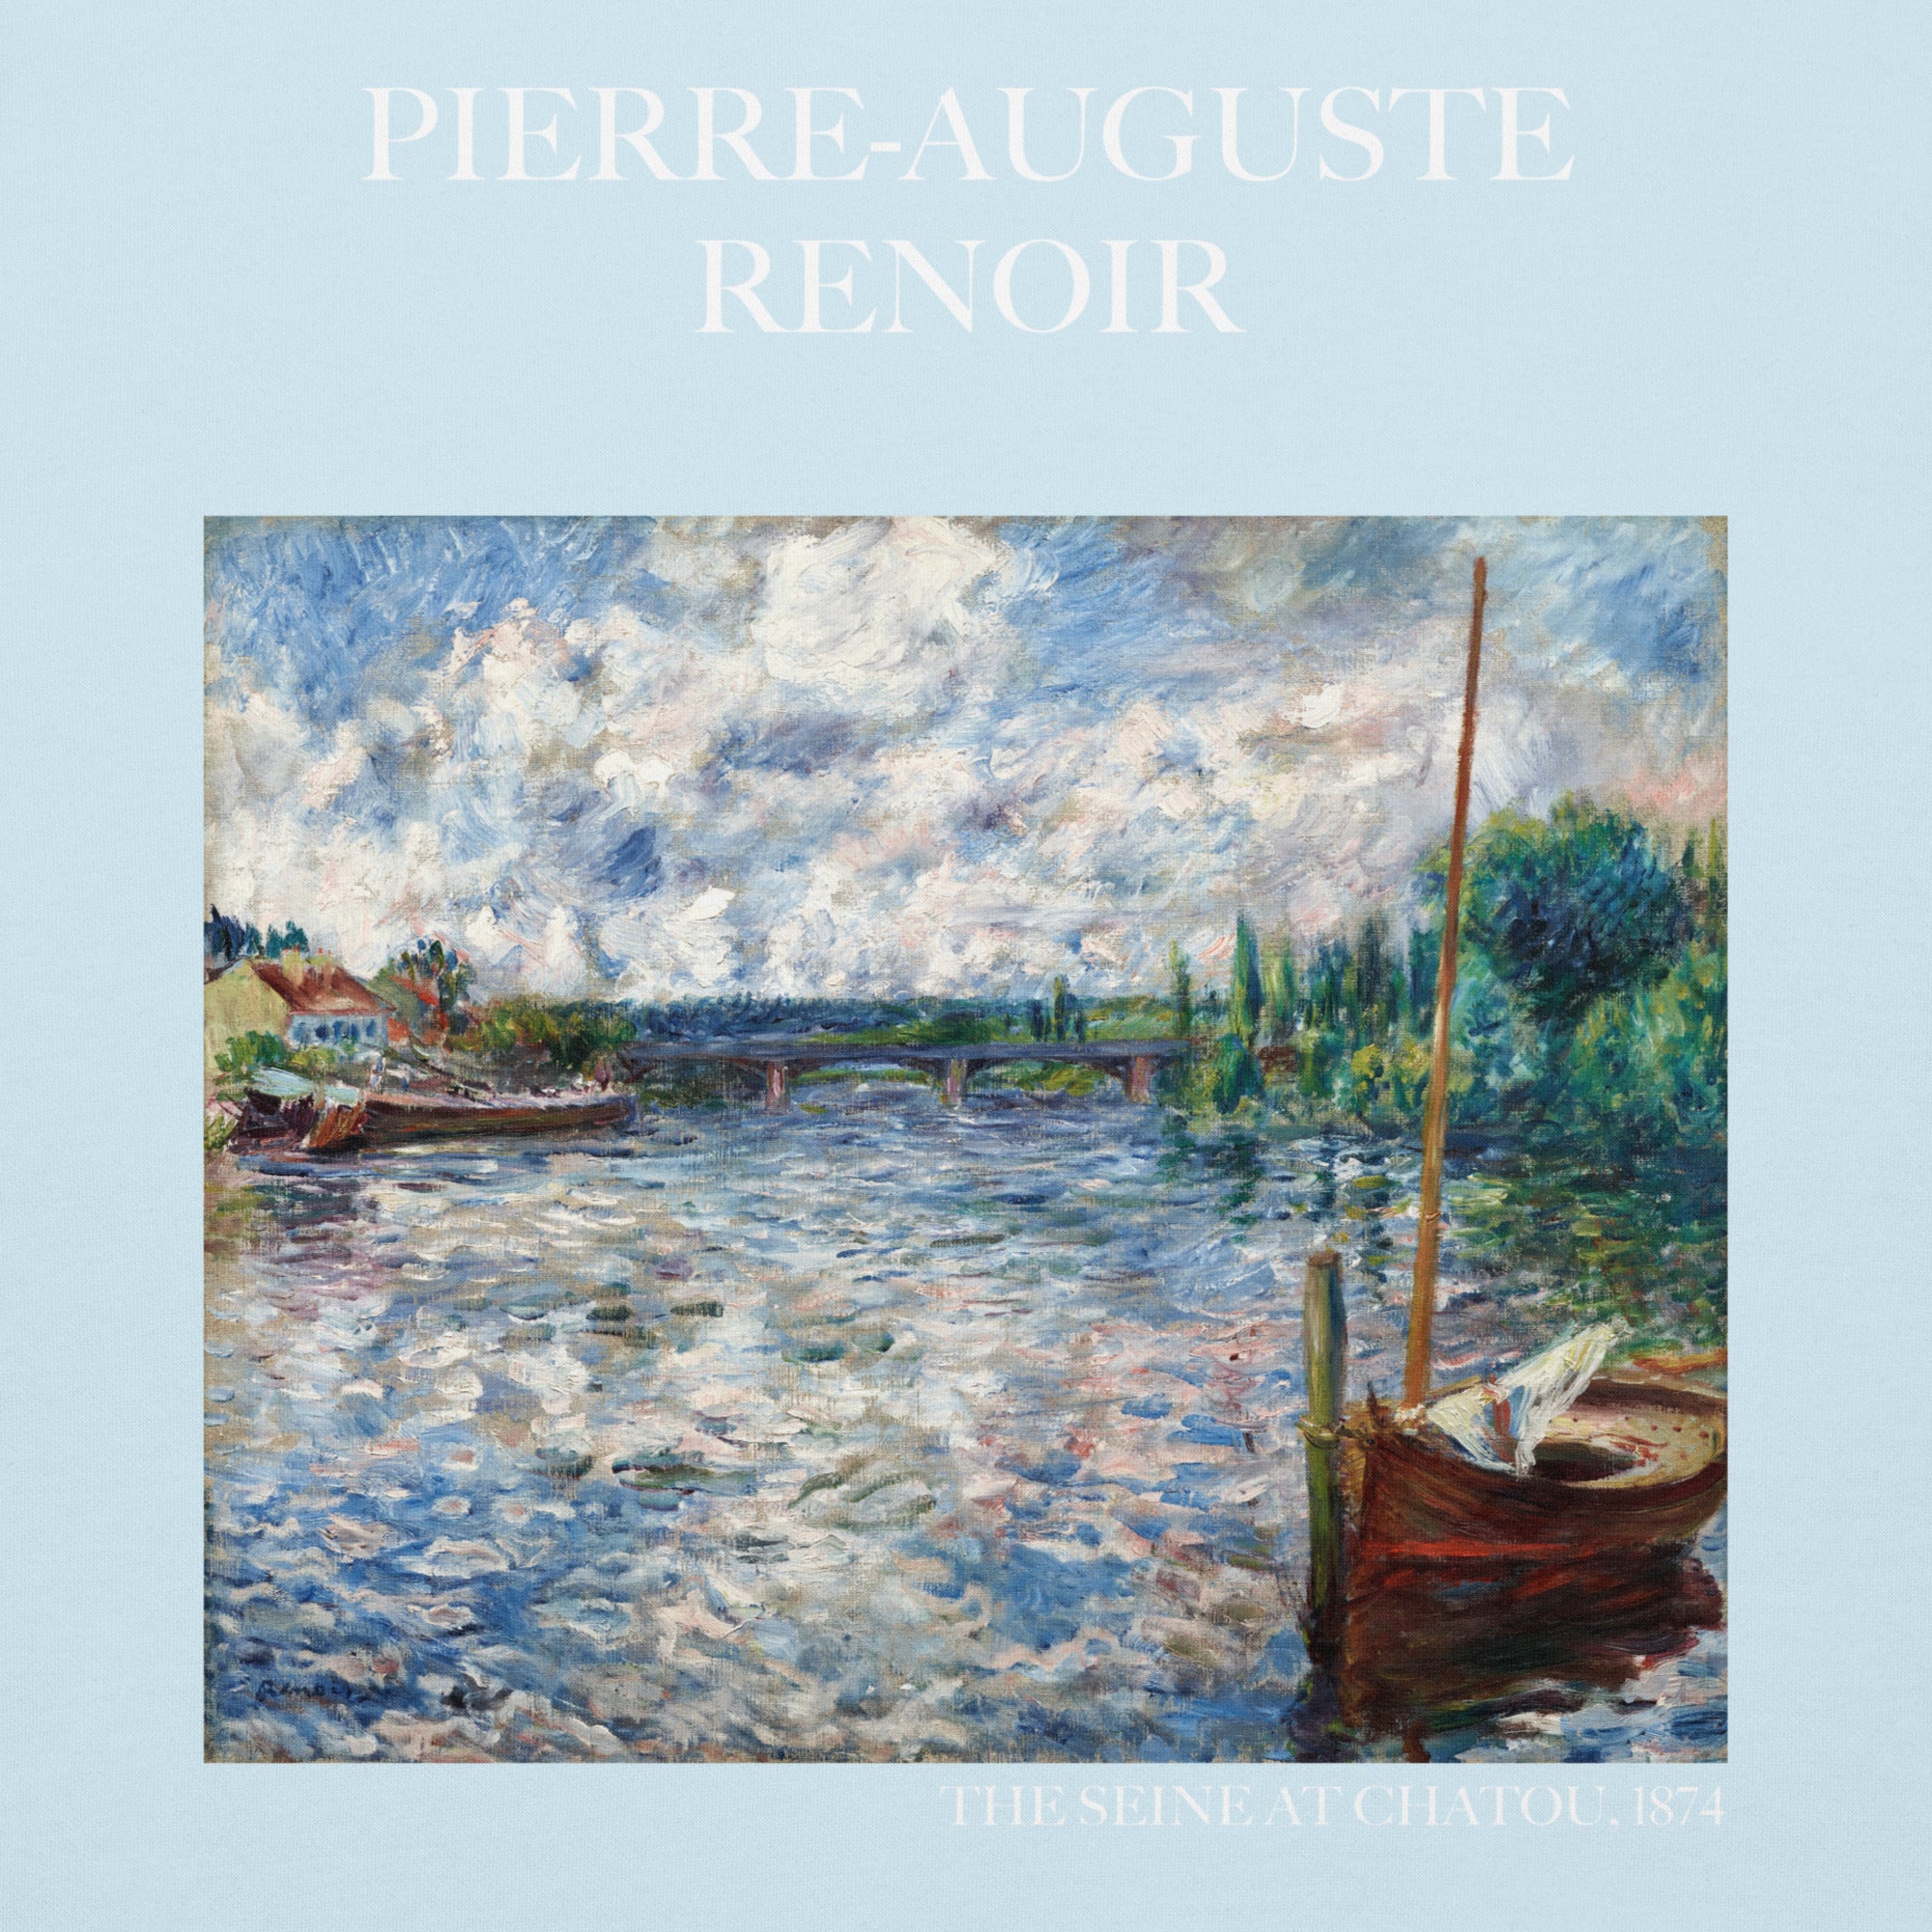 Pierre-Auguste Renoir 'The Seine at Chatou' Famous Painting Hoodie | Unisex Premium Art Hoodie